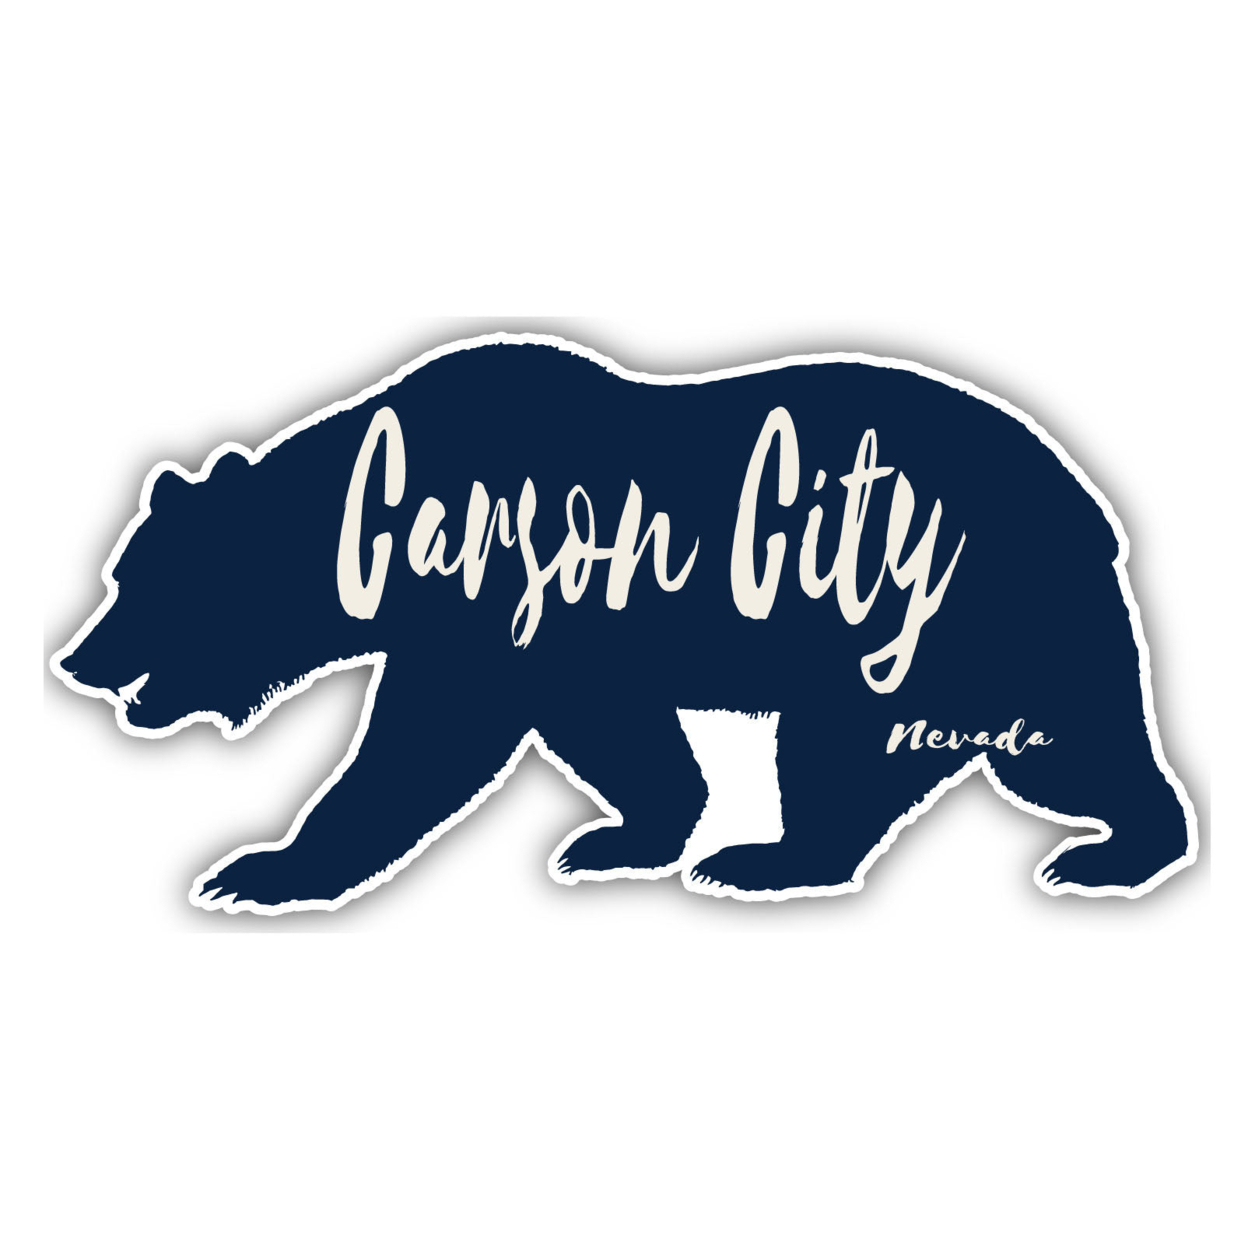 Carson City Nevada Souvenir Decorative Stickers (Choose Theme And Size) - Single Unit, 6-Inch, Bear